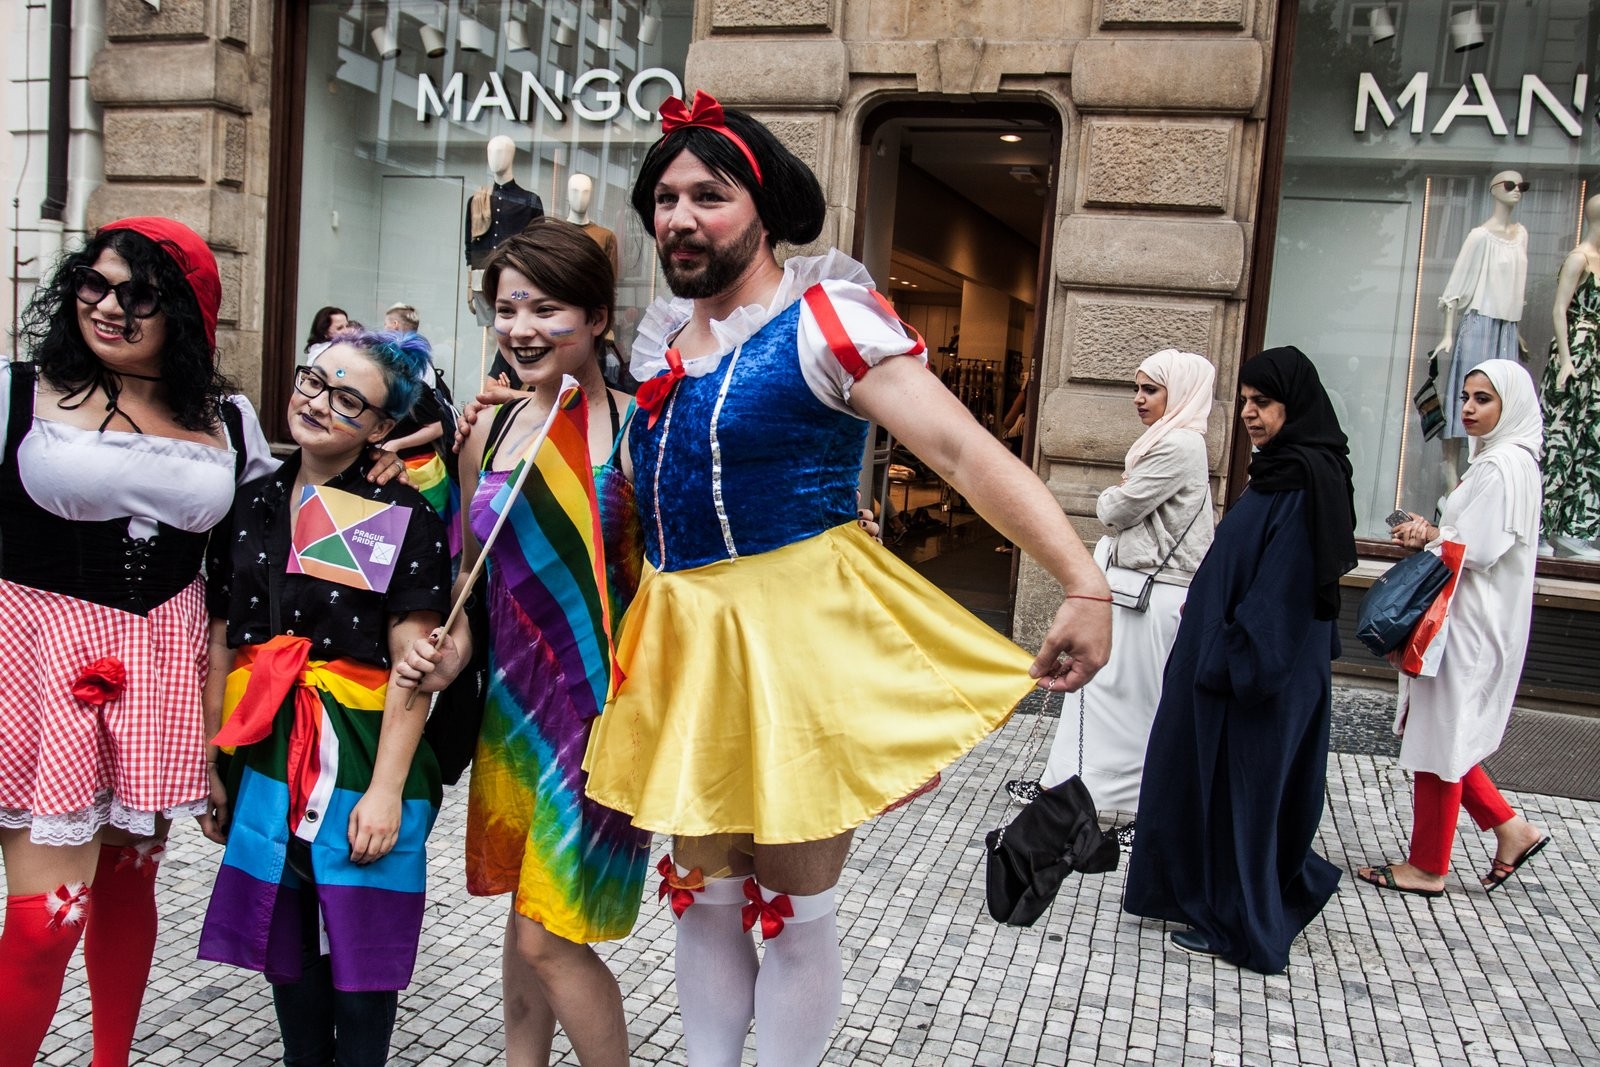 Participans of Prague Gay Pride Parade and Muslim women passing by. (Foto: David Tesinsky)